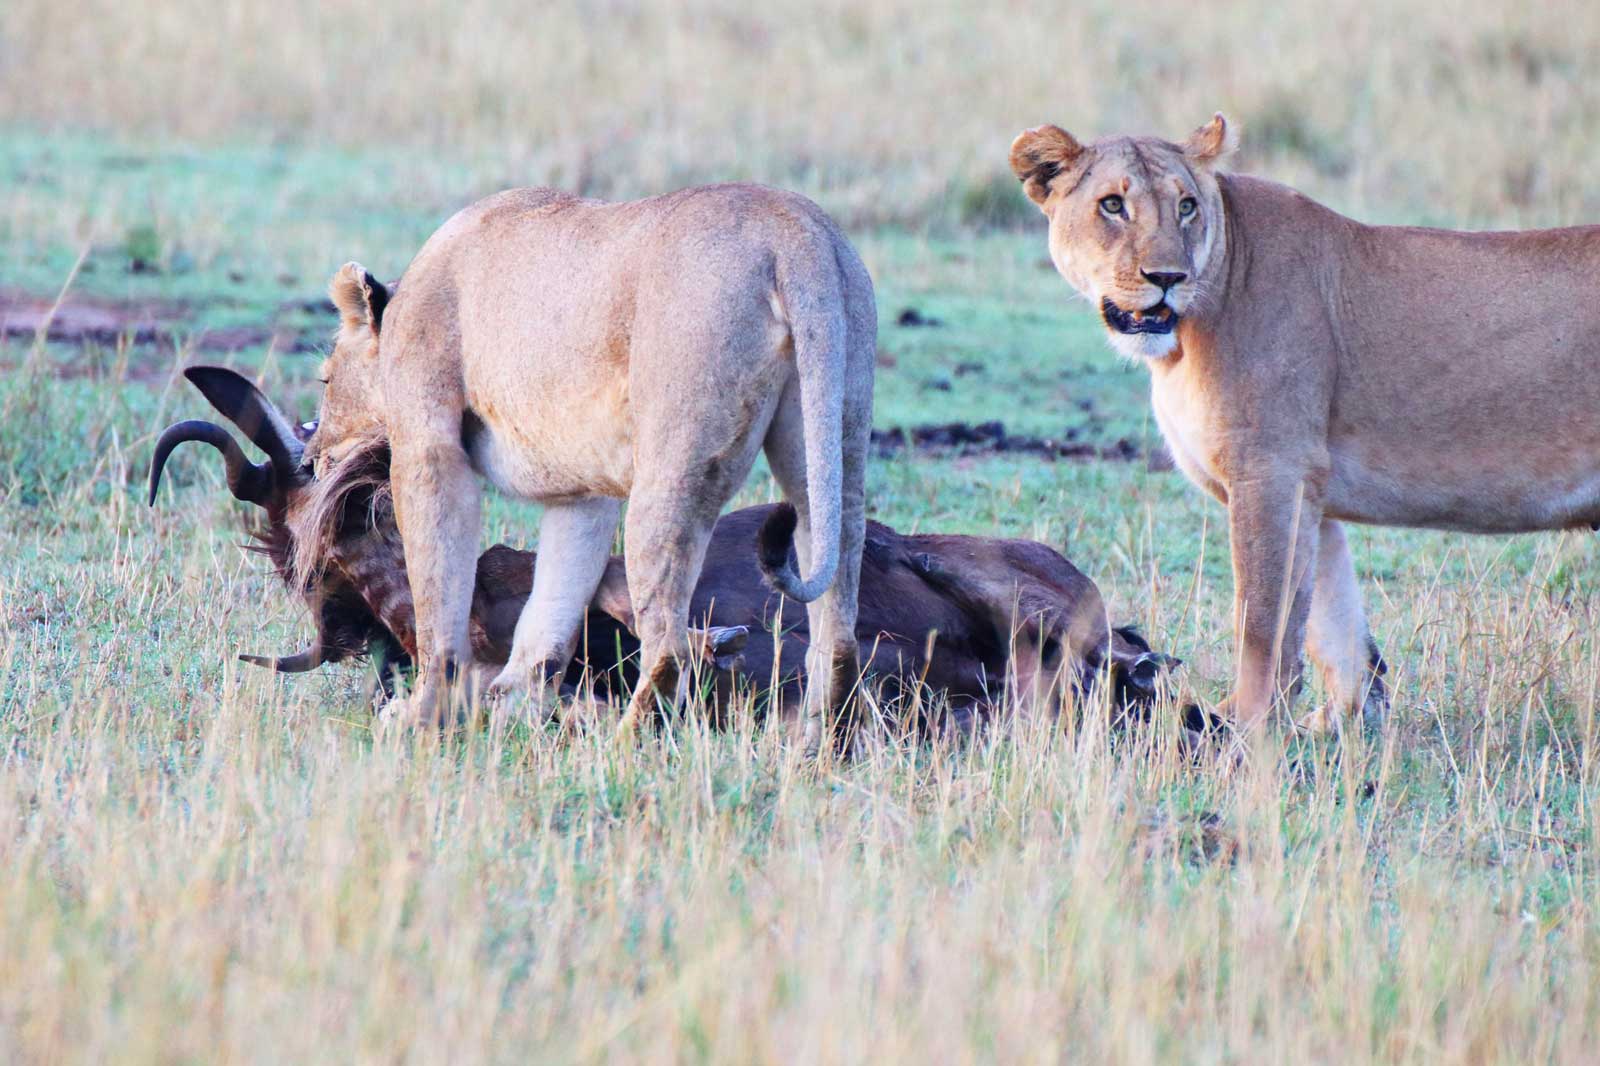 Stories from the Masai Mara: Lion Pride Kills Wildebeest ...